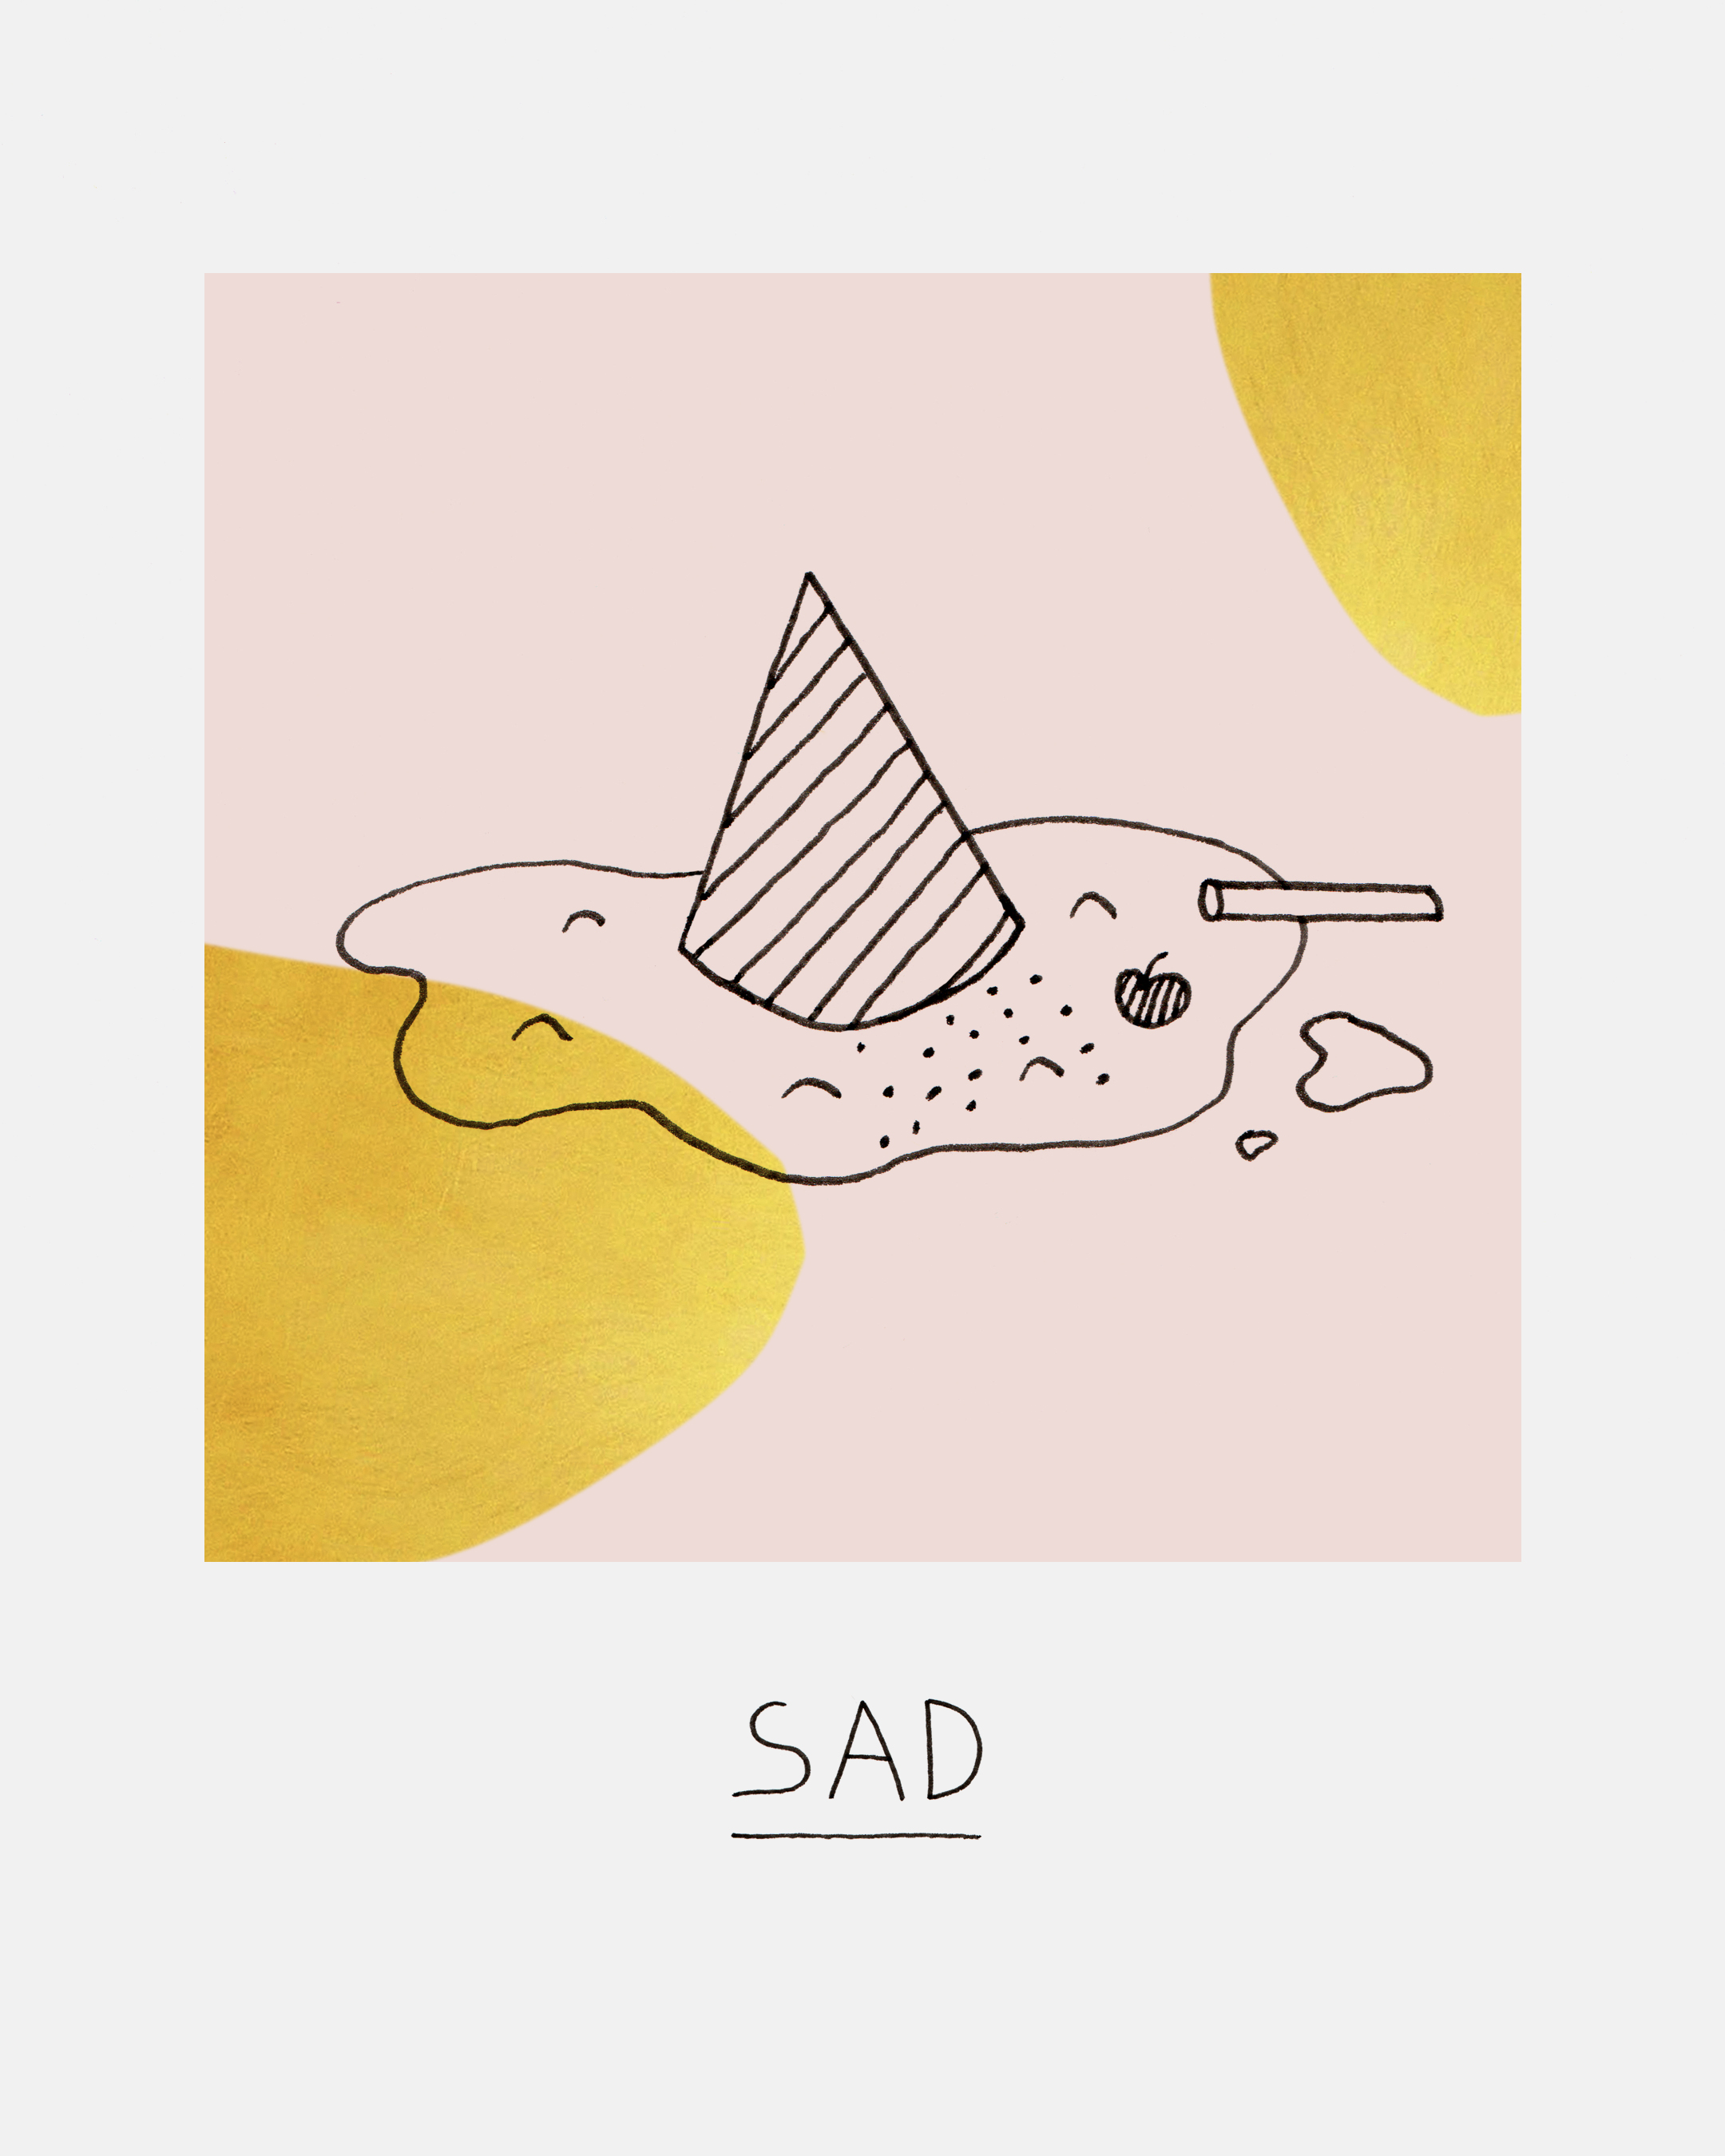 The Sad Happy project